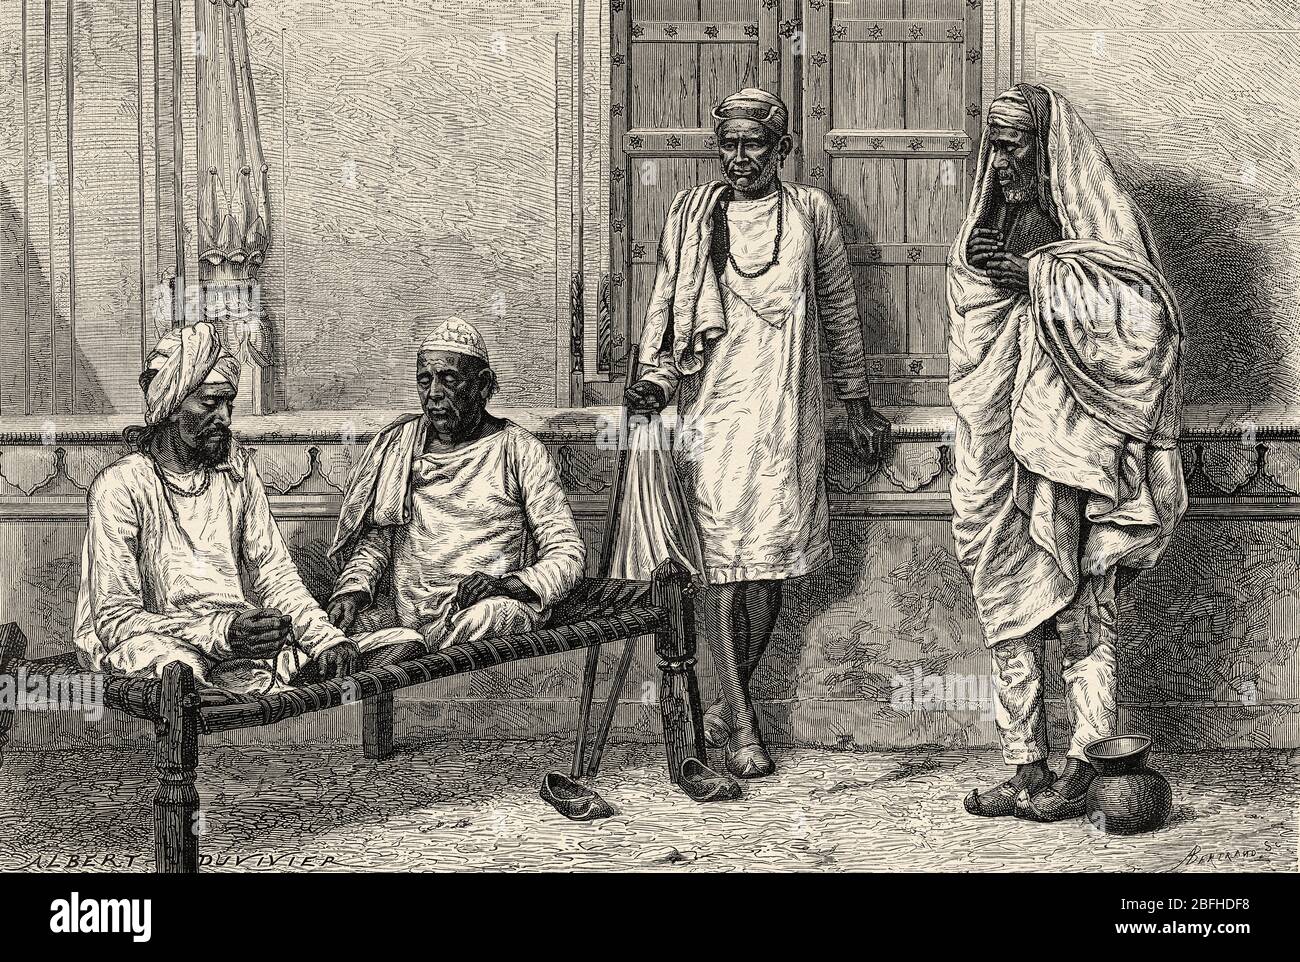 Portrait of Religious mendicants, Benares. Uttar Pradesh, India. Old engraving illustration from El Mundo en la Mano 1878 Stock Photo